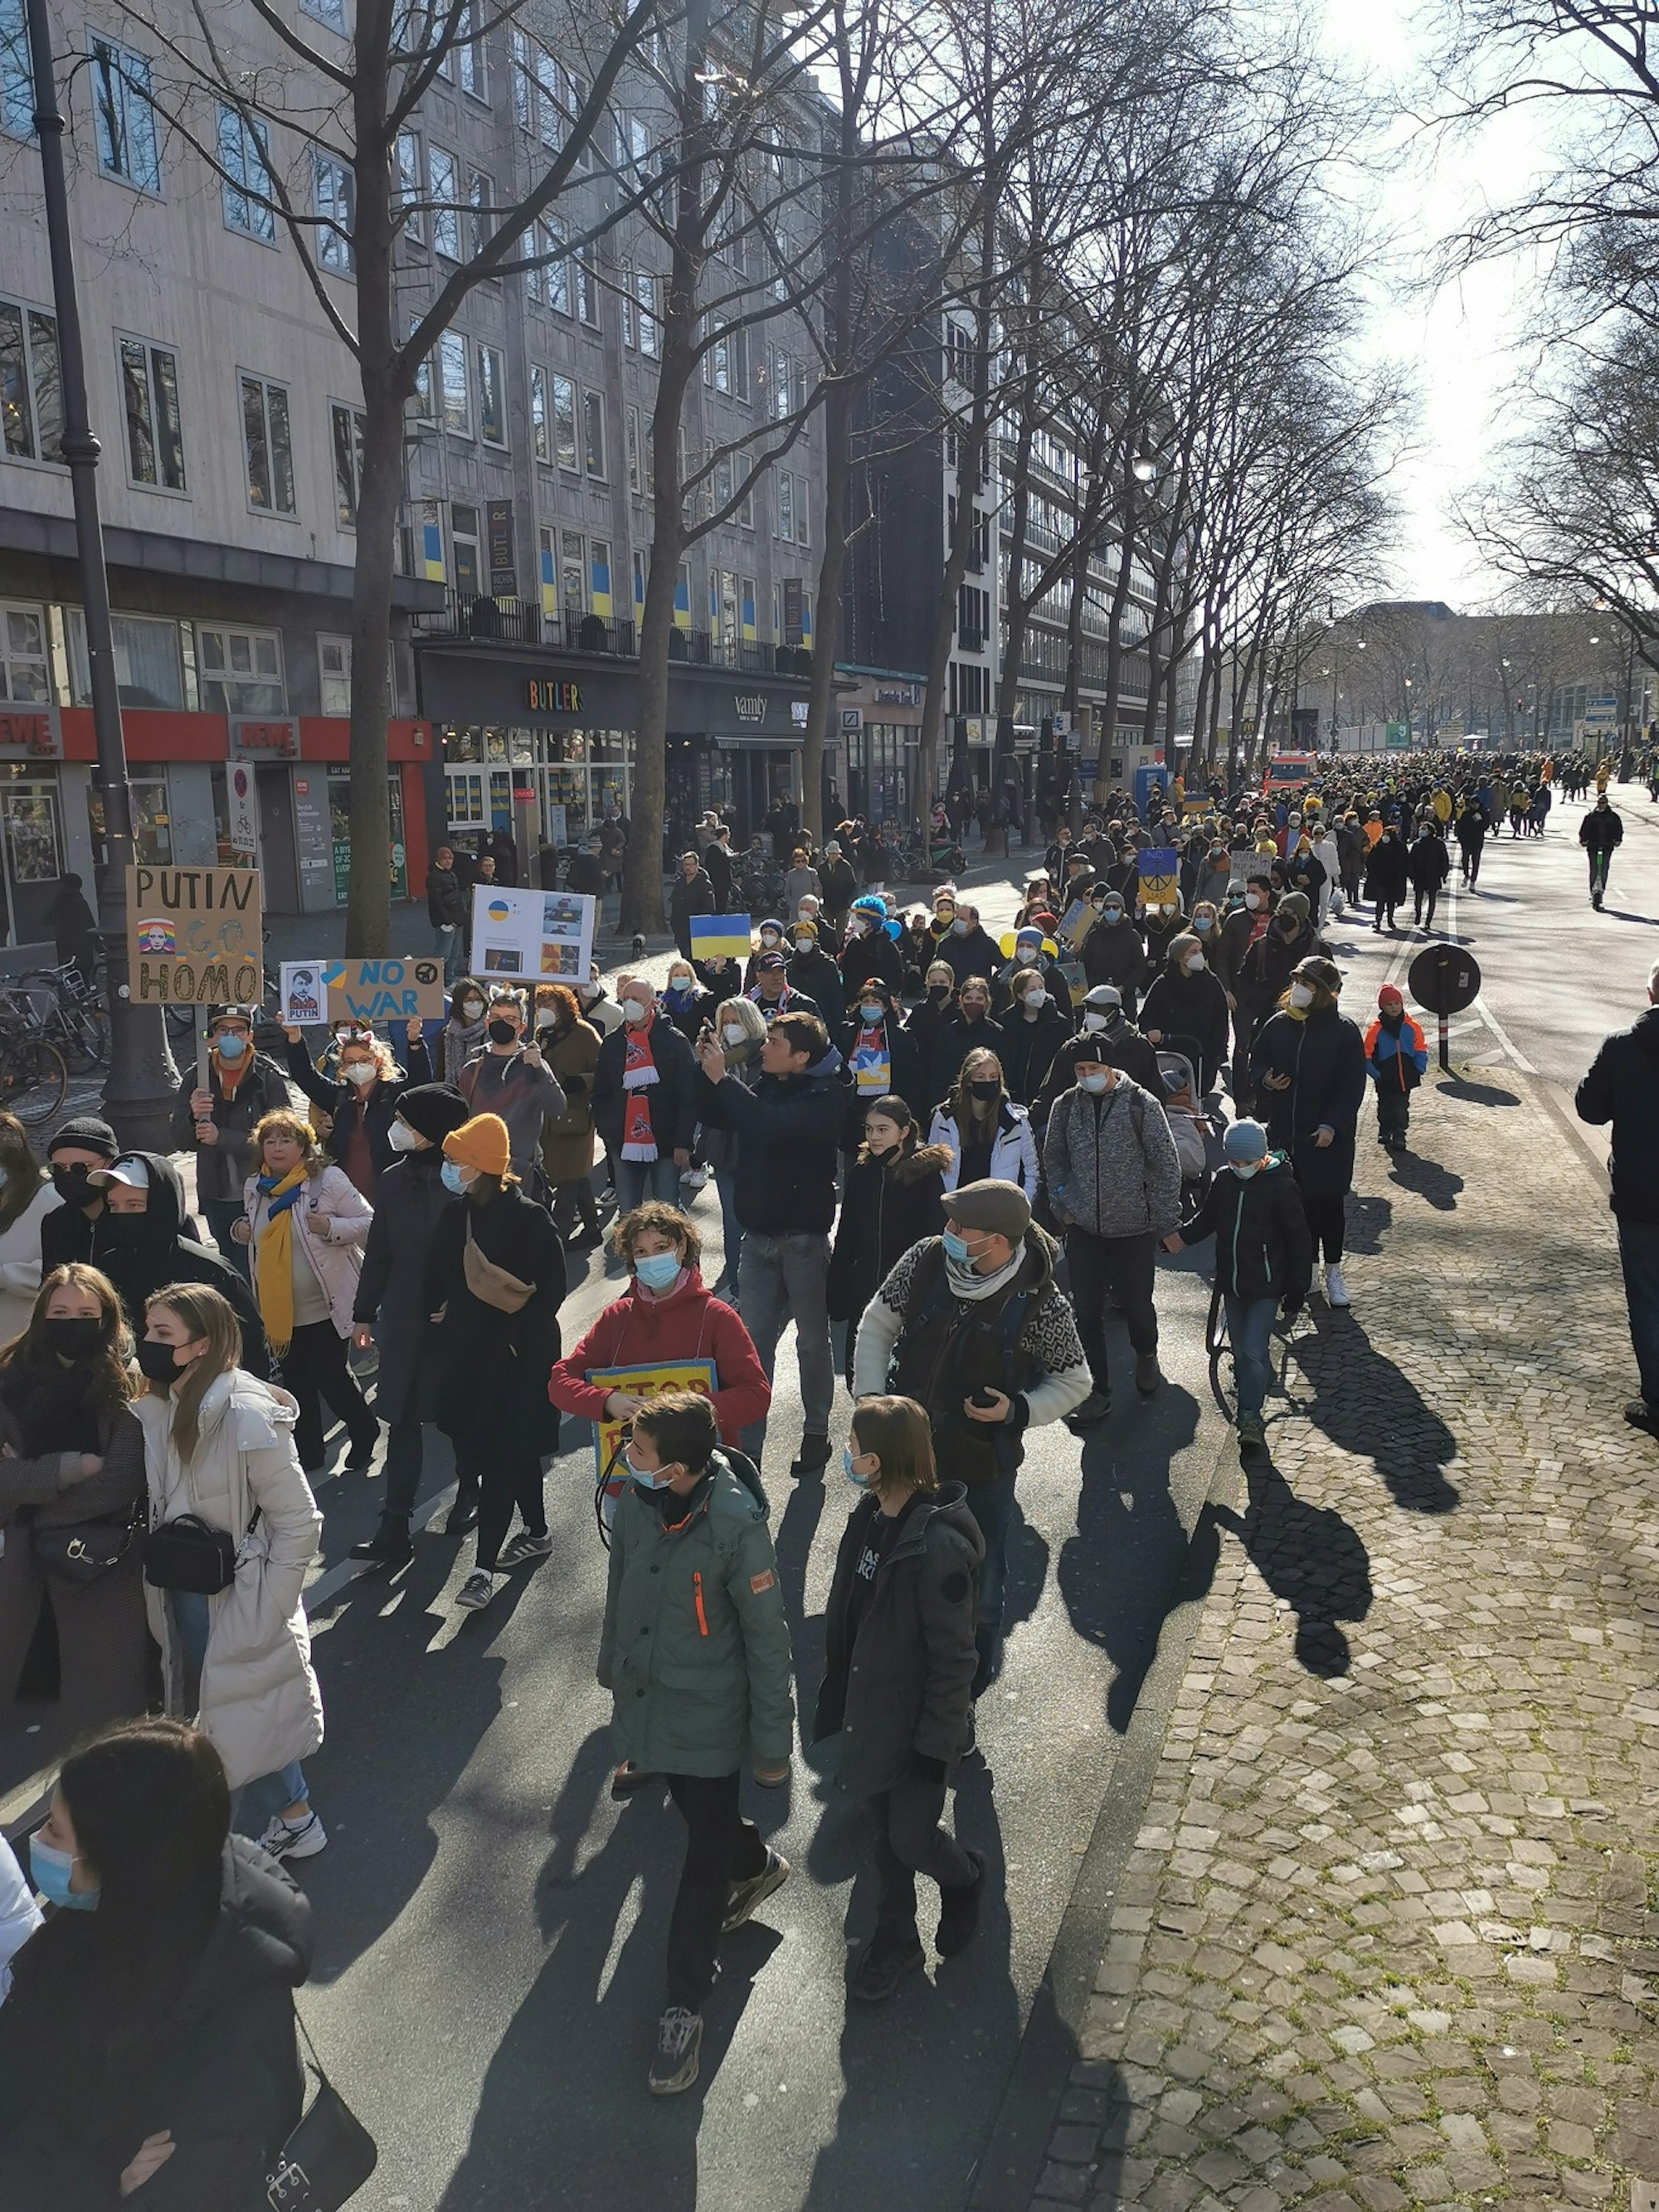 Demo in Köln 2 Hanano